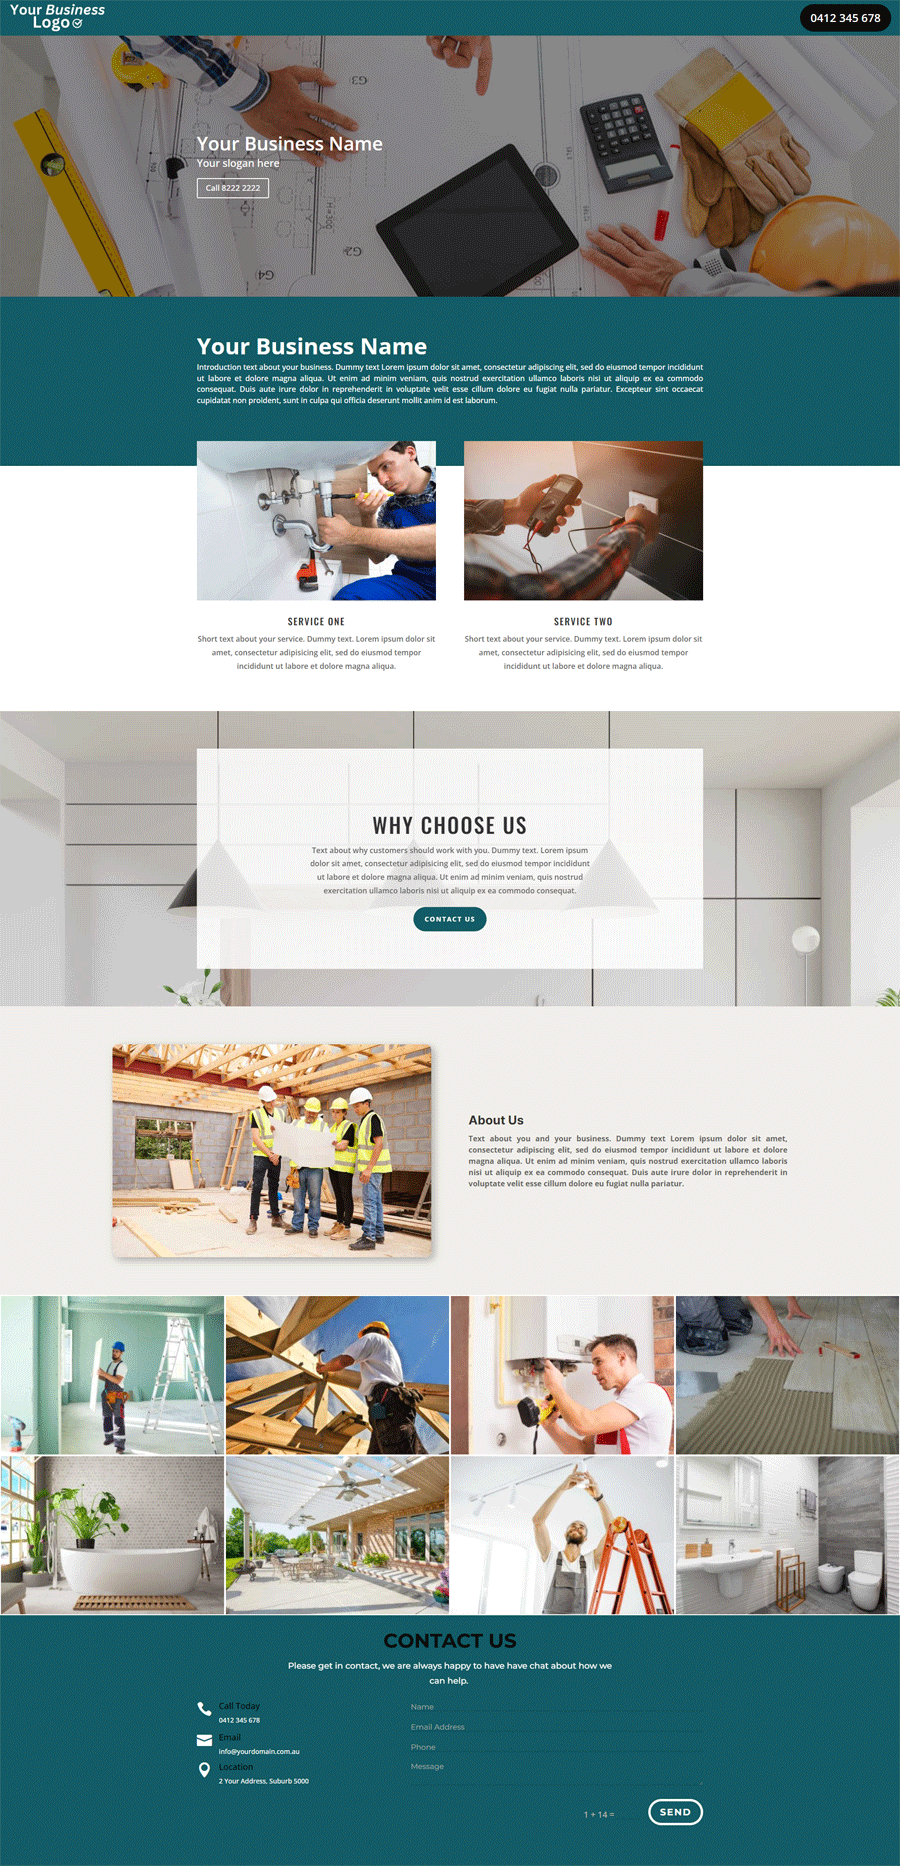 Website Design Adelaide - Homes